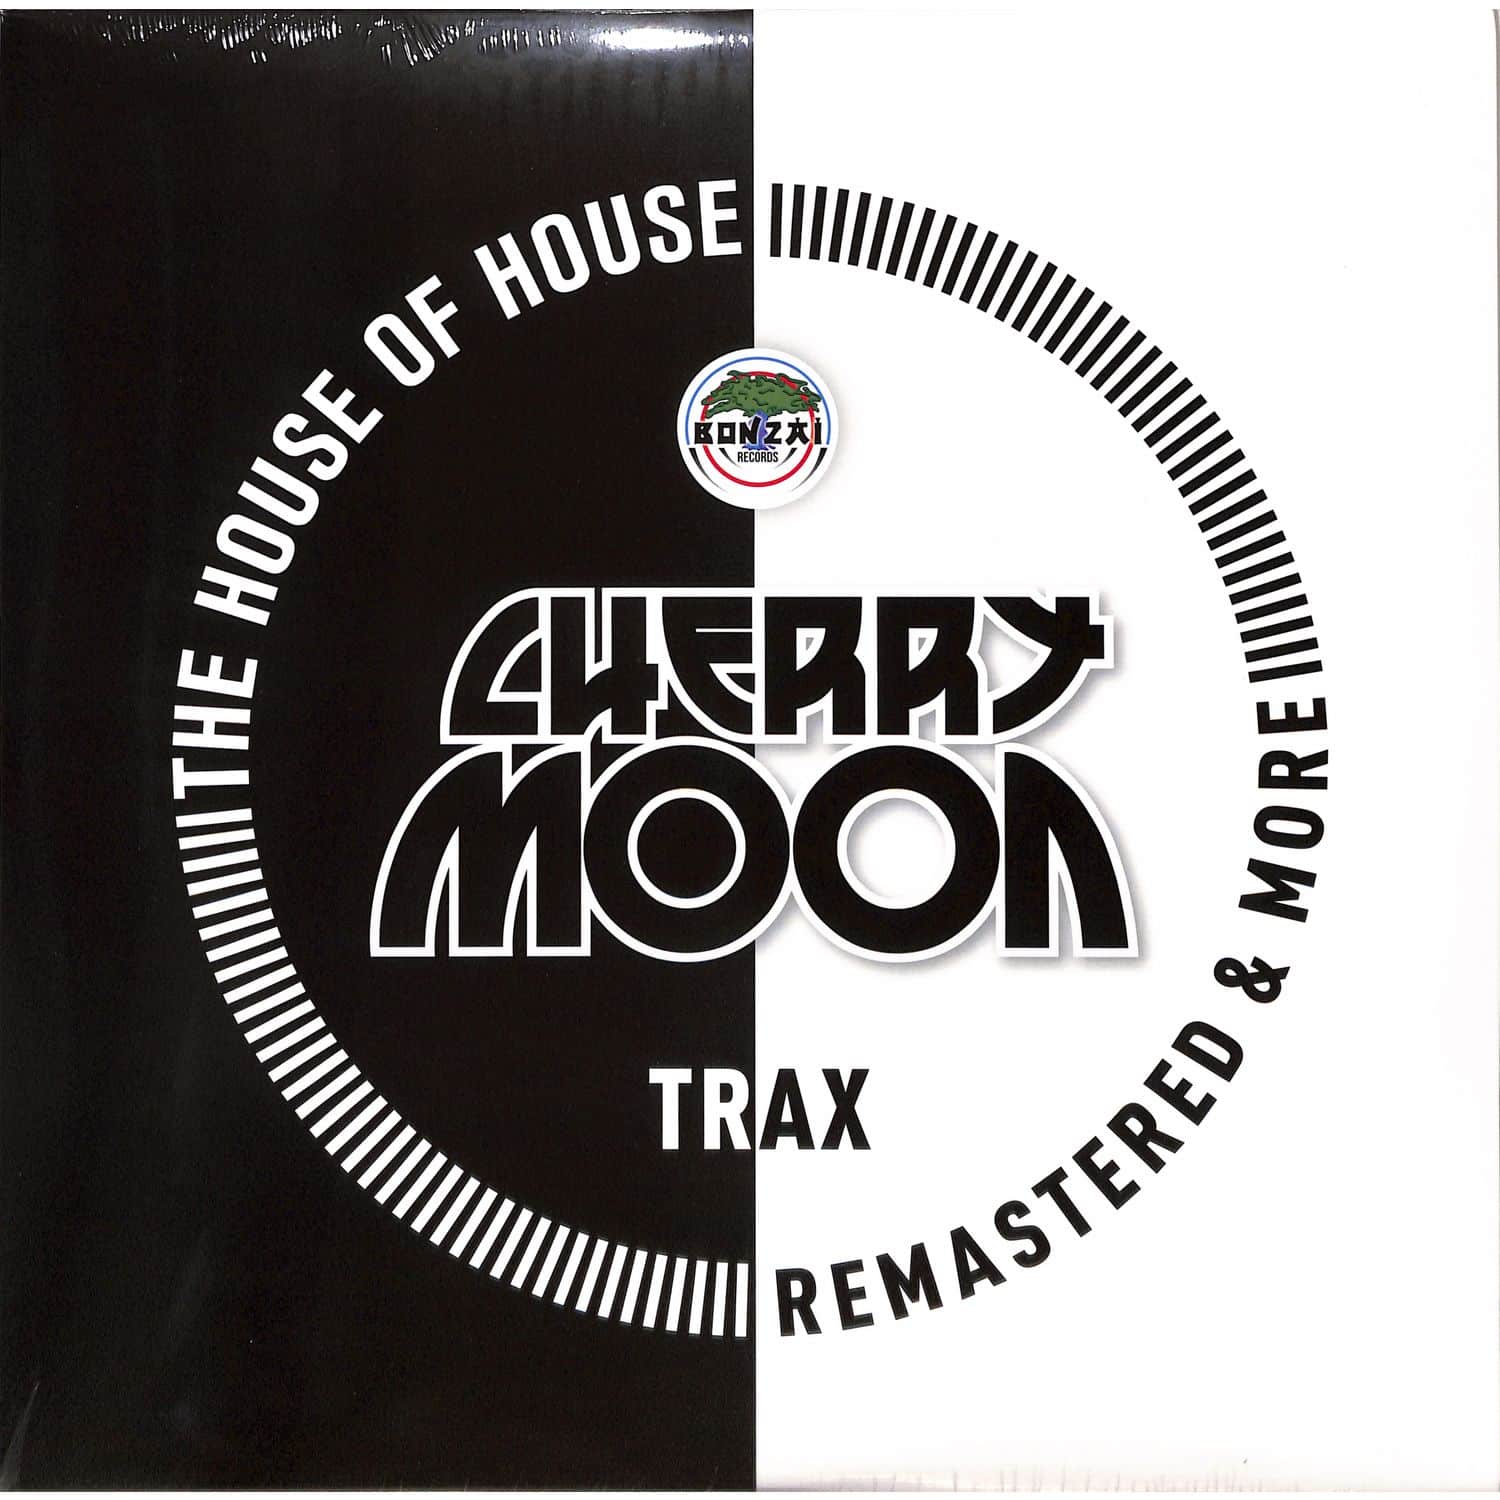 Cherrymoon Trax - THE HOUSE OF HOUSE 